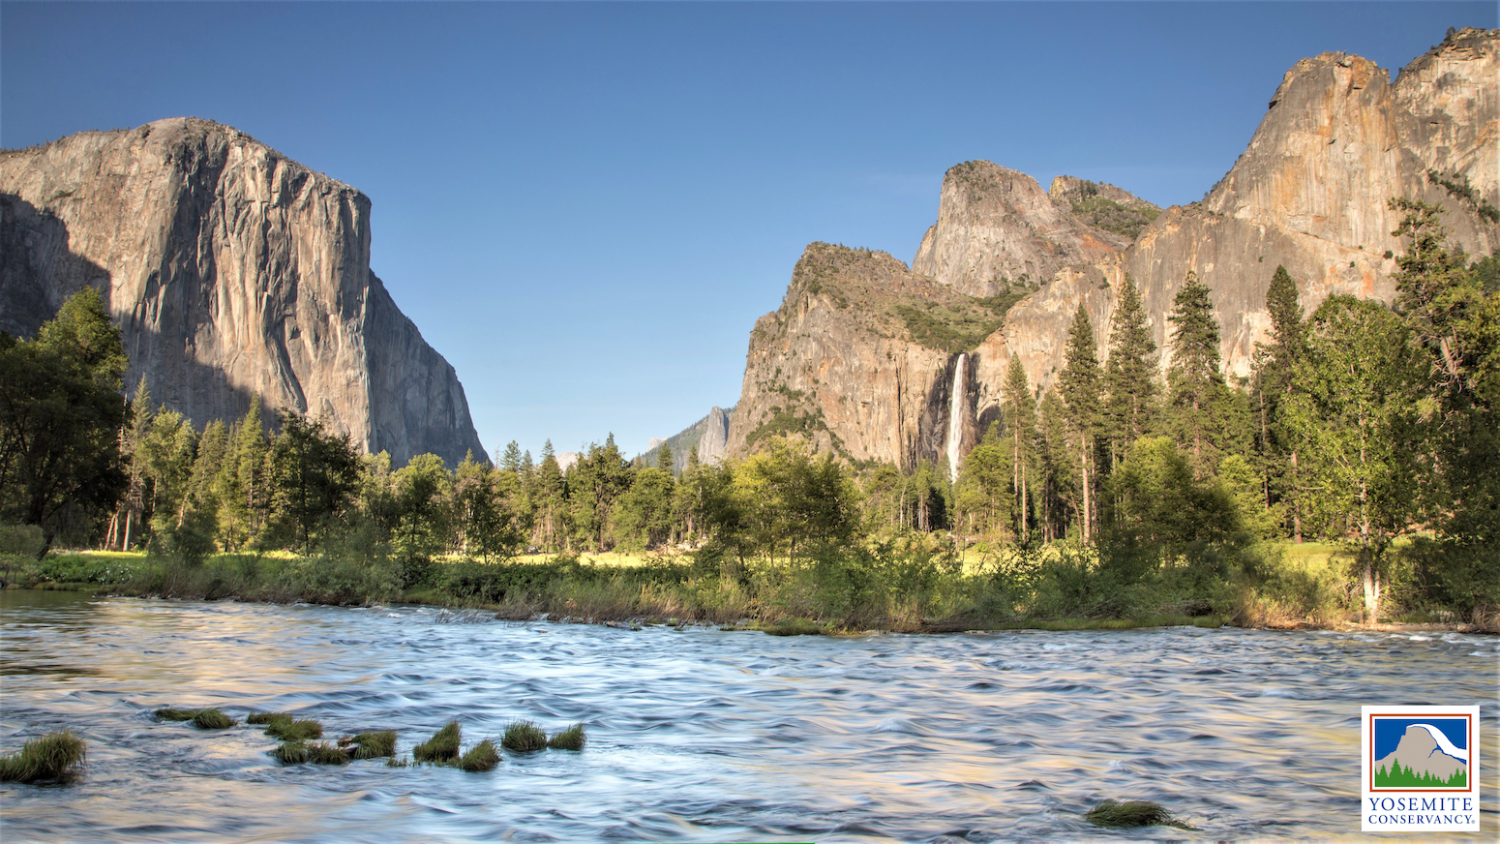 Help the Yosemite Conservancy help Yosemite National Park